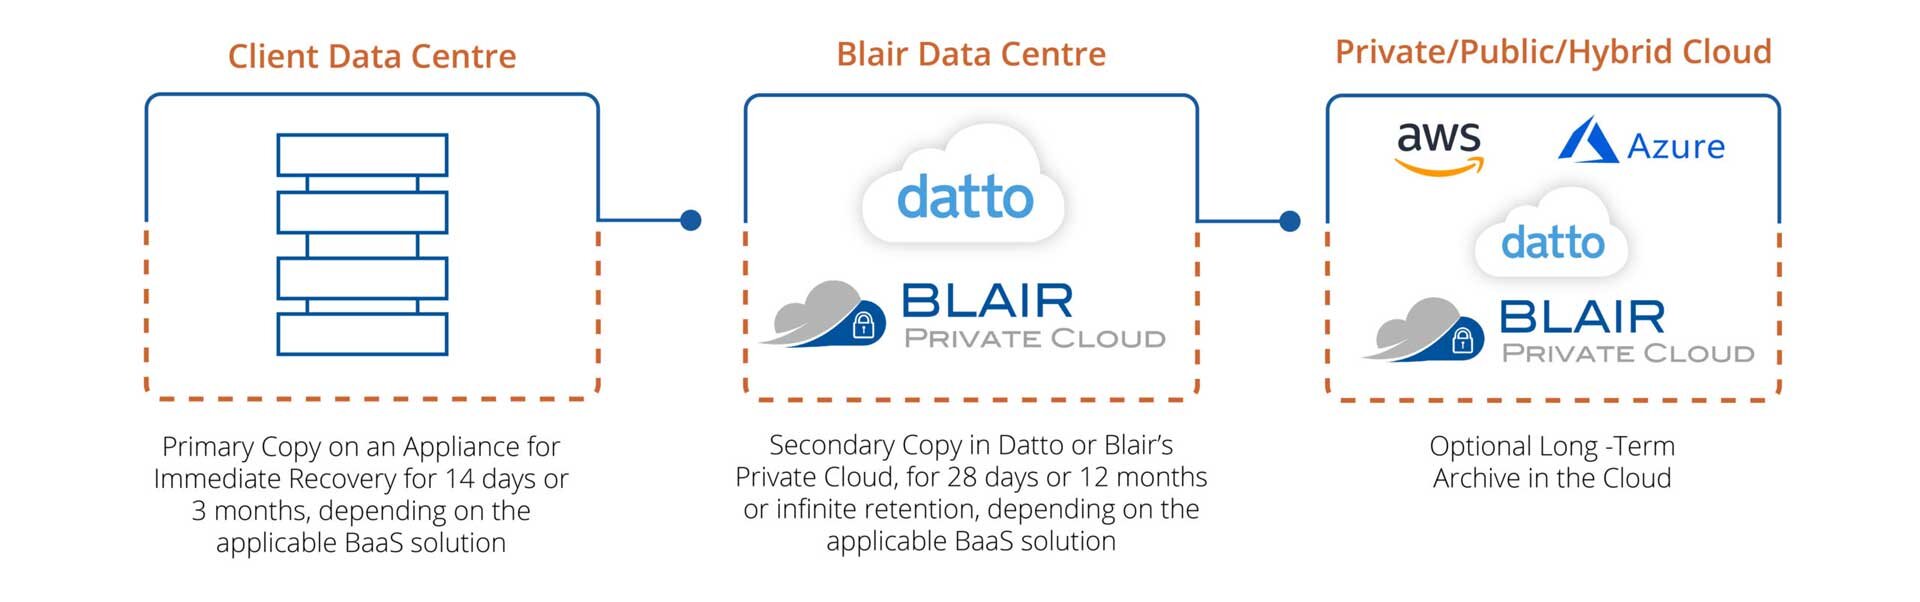 Blair Backup Process Image